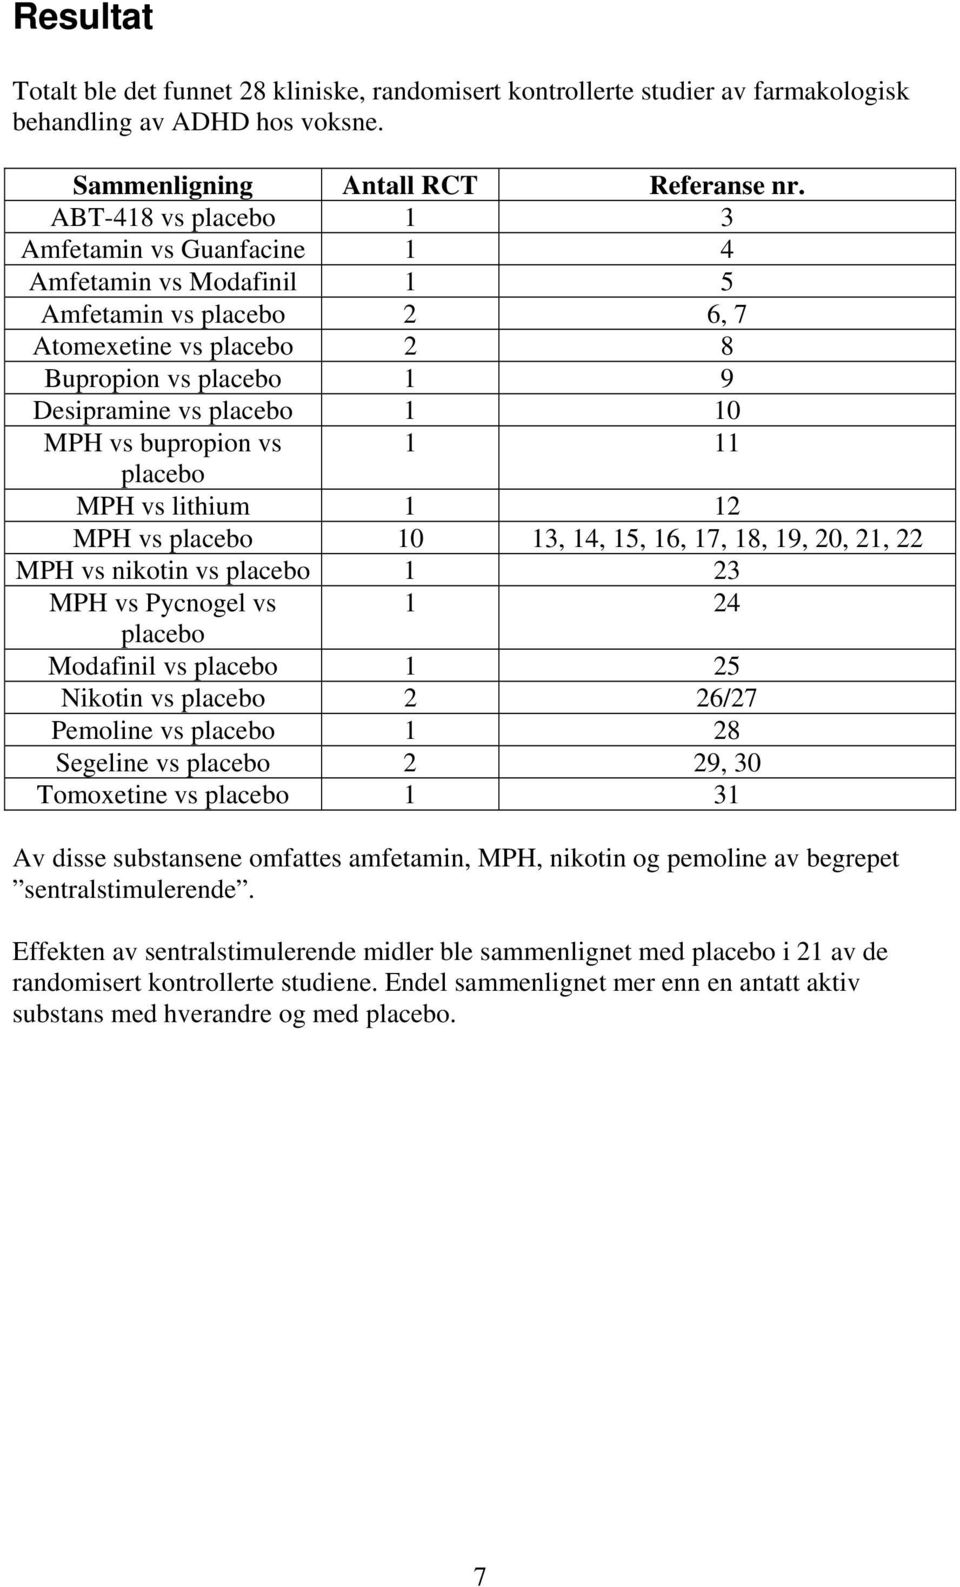 bupropion vs 1 11 placebo MPH vs lithium 1 12 MPH vs placebo 10 13, 14, 15, 16, 17, 18, 19, 20, 21, 22 MPH vs nikotin vs placebo 1 23 MPH vs Pycnogel vs 1 24 placebo Modafinil vs placebo 1 25 Nikotin